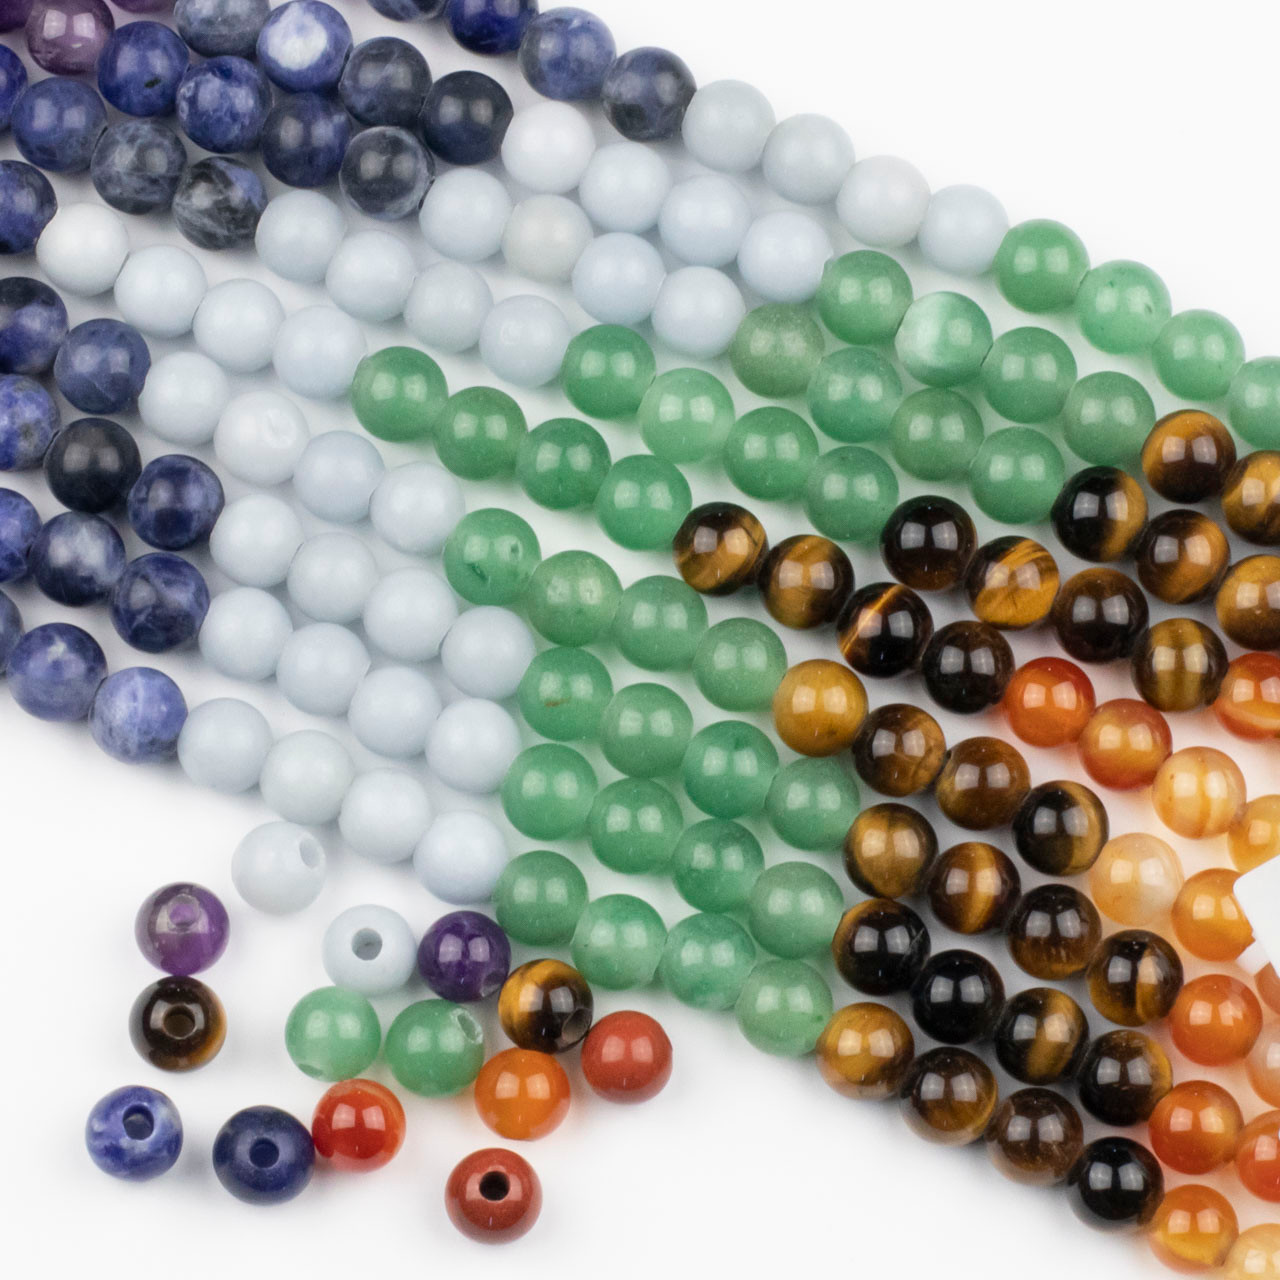 How to Use Large-Hole Beads 